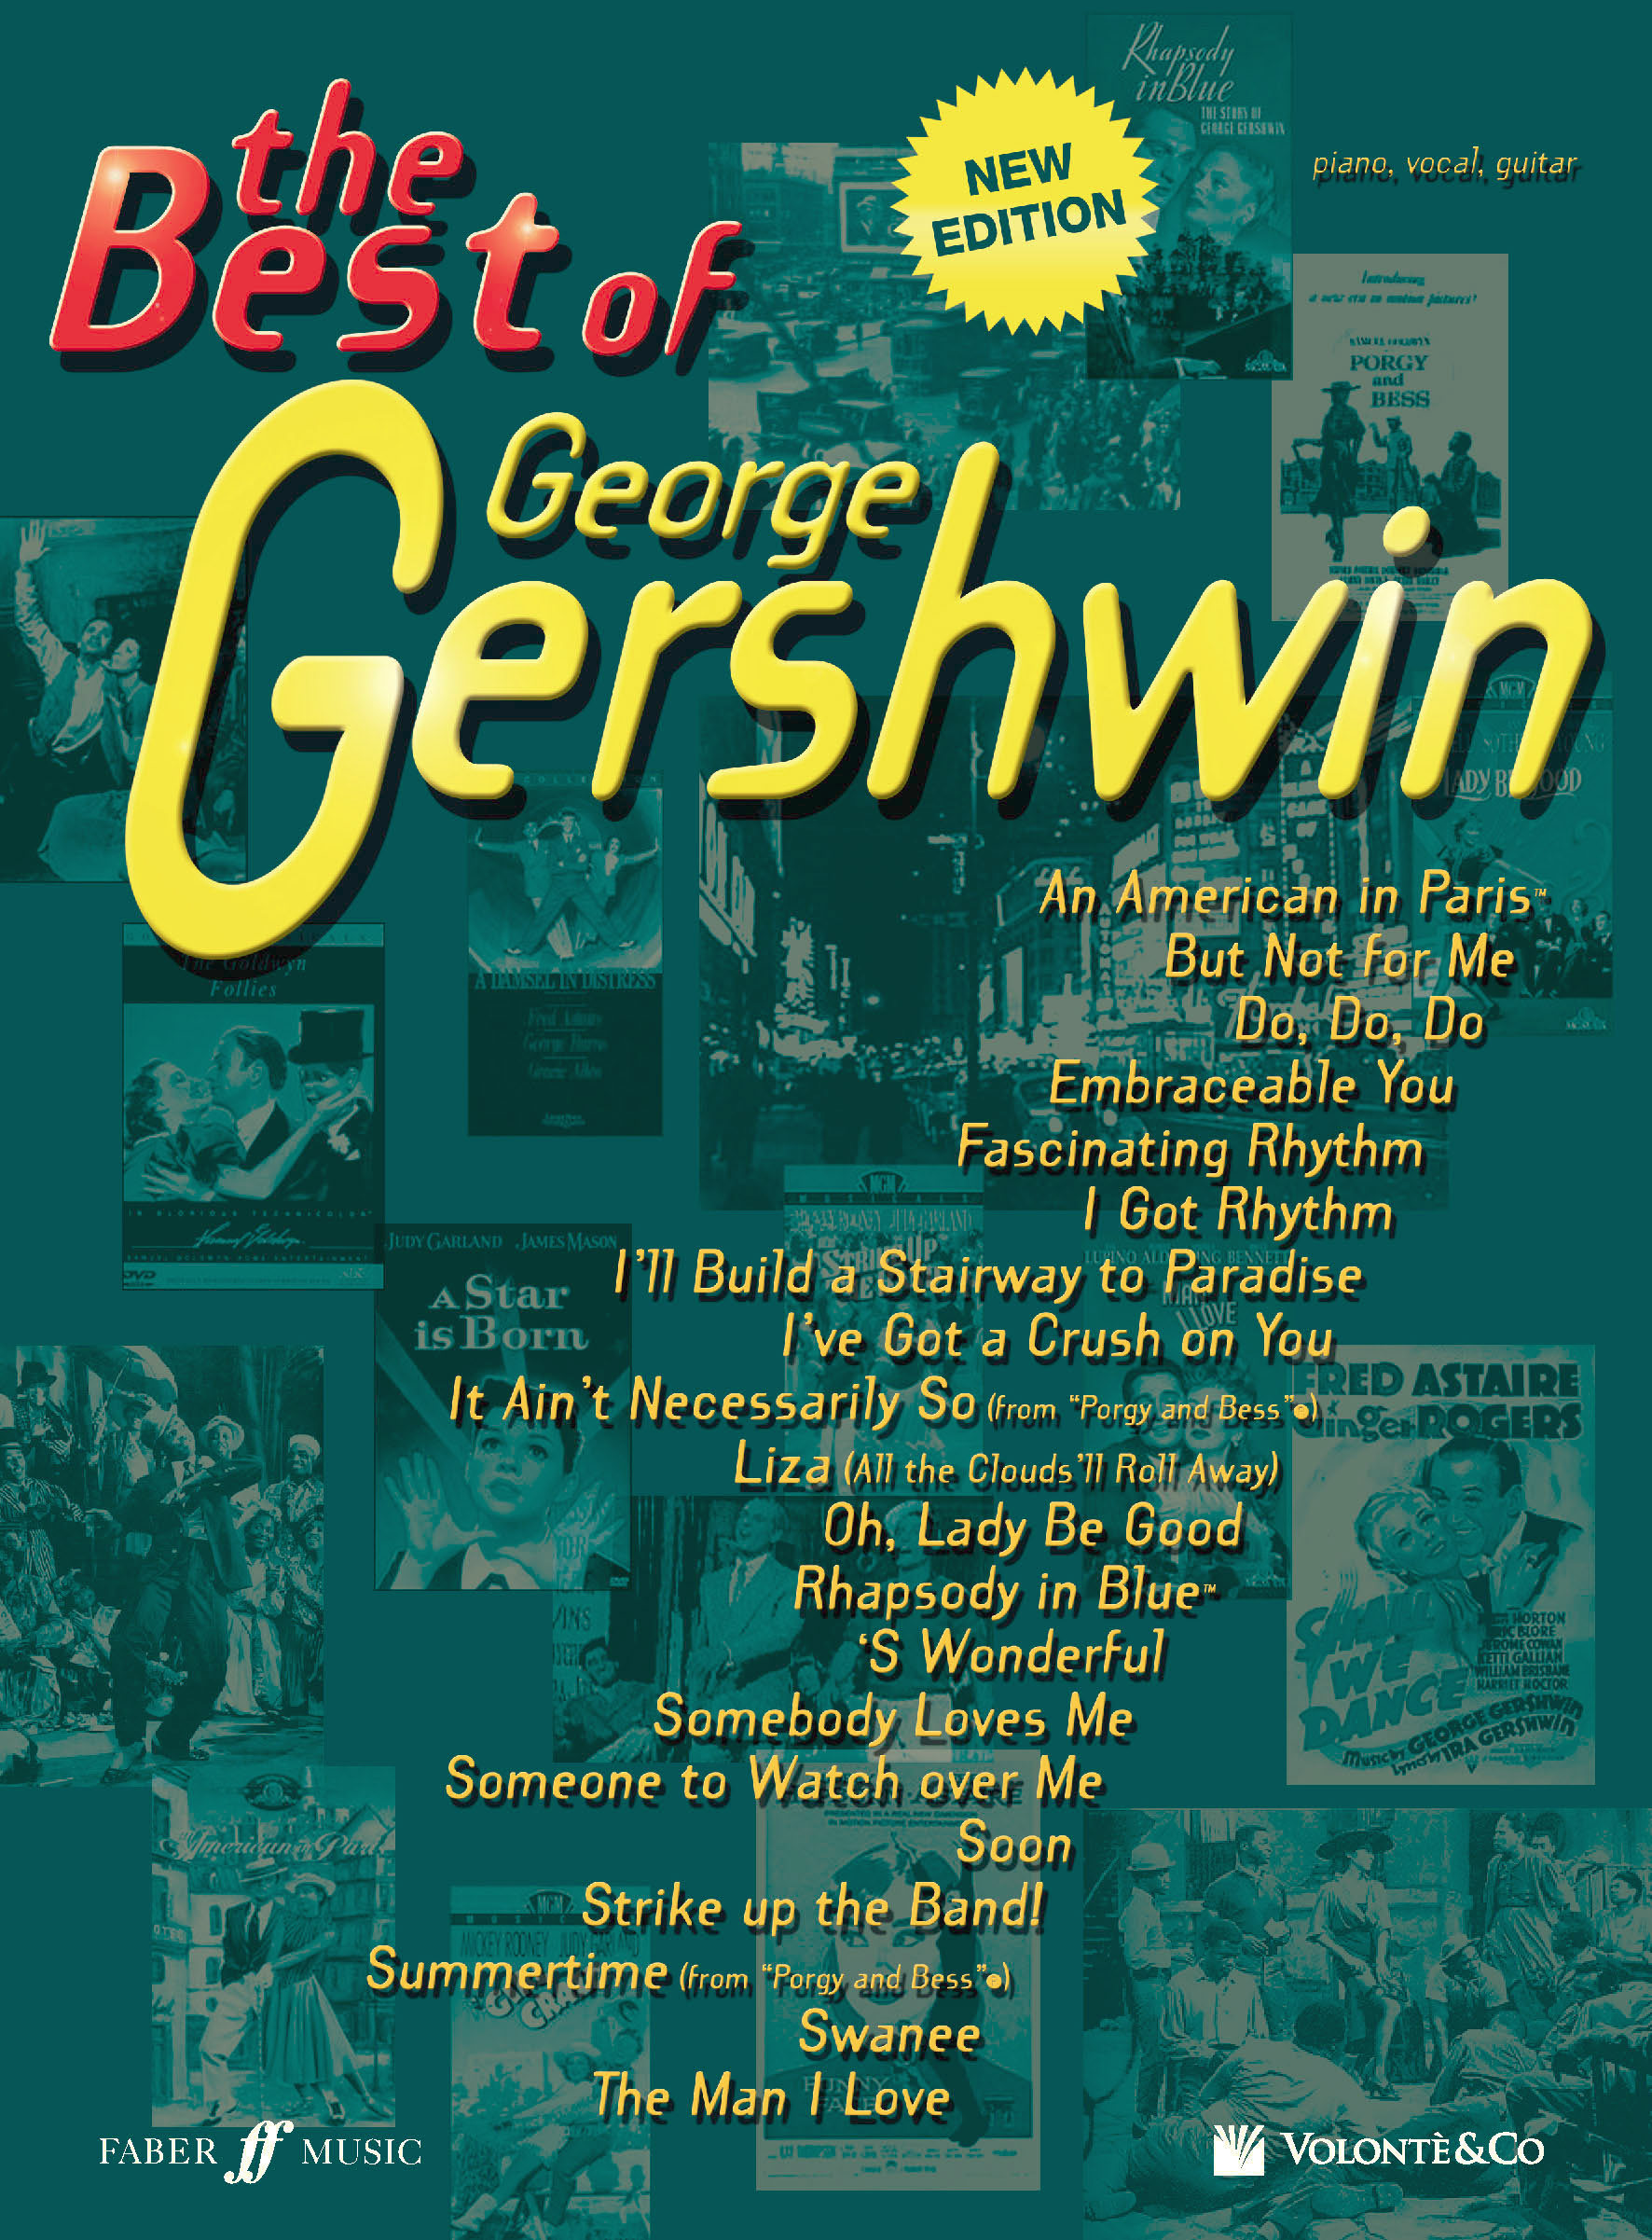 THE BEST OF GEORGE GERSHWIN